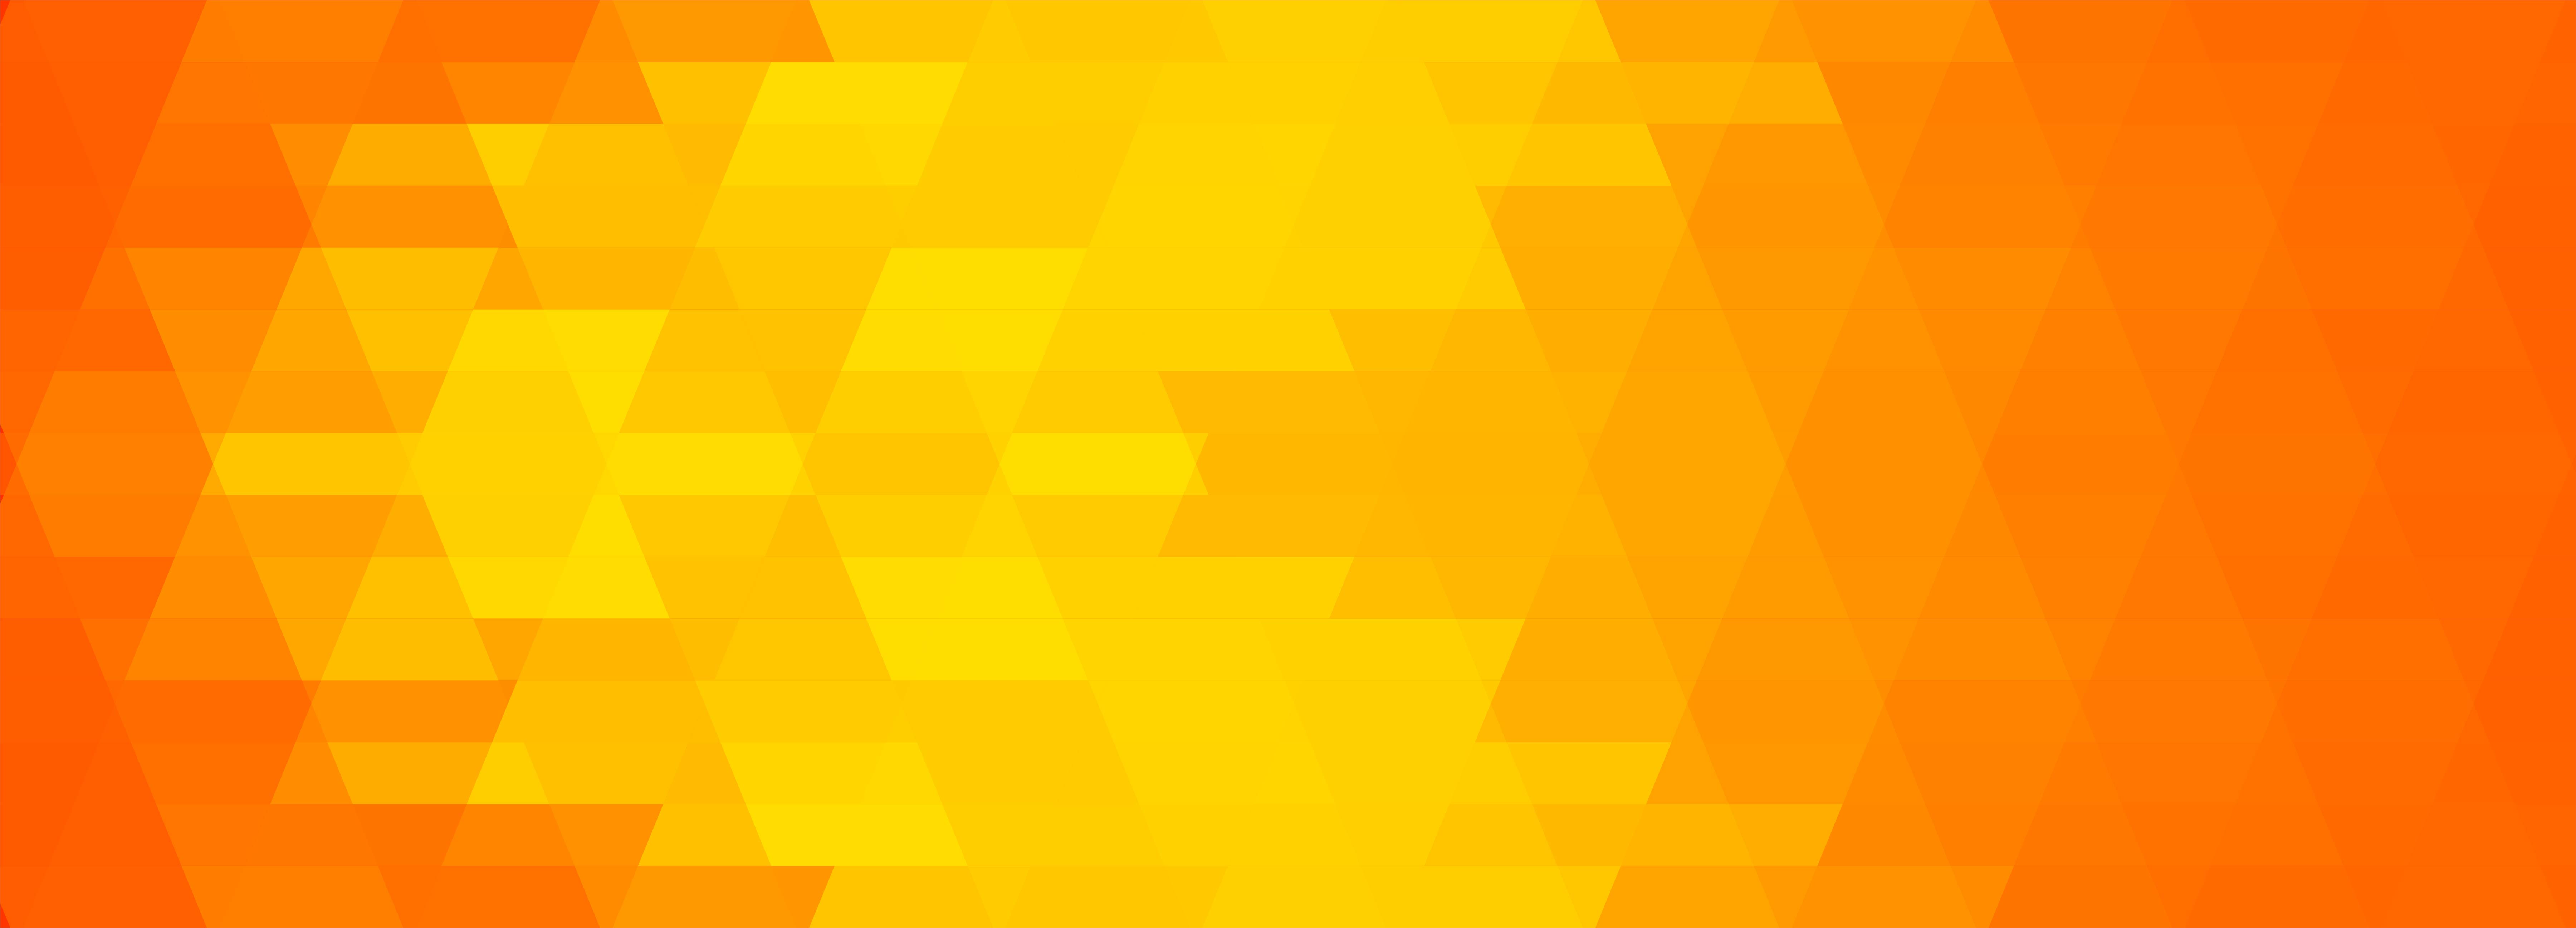 Abstract Yellow Polygonal Geometric Banner 1225921 Vector Art At Vecteezy